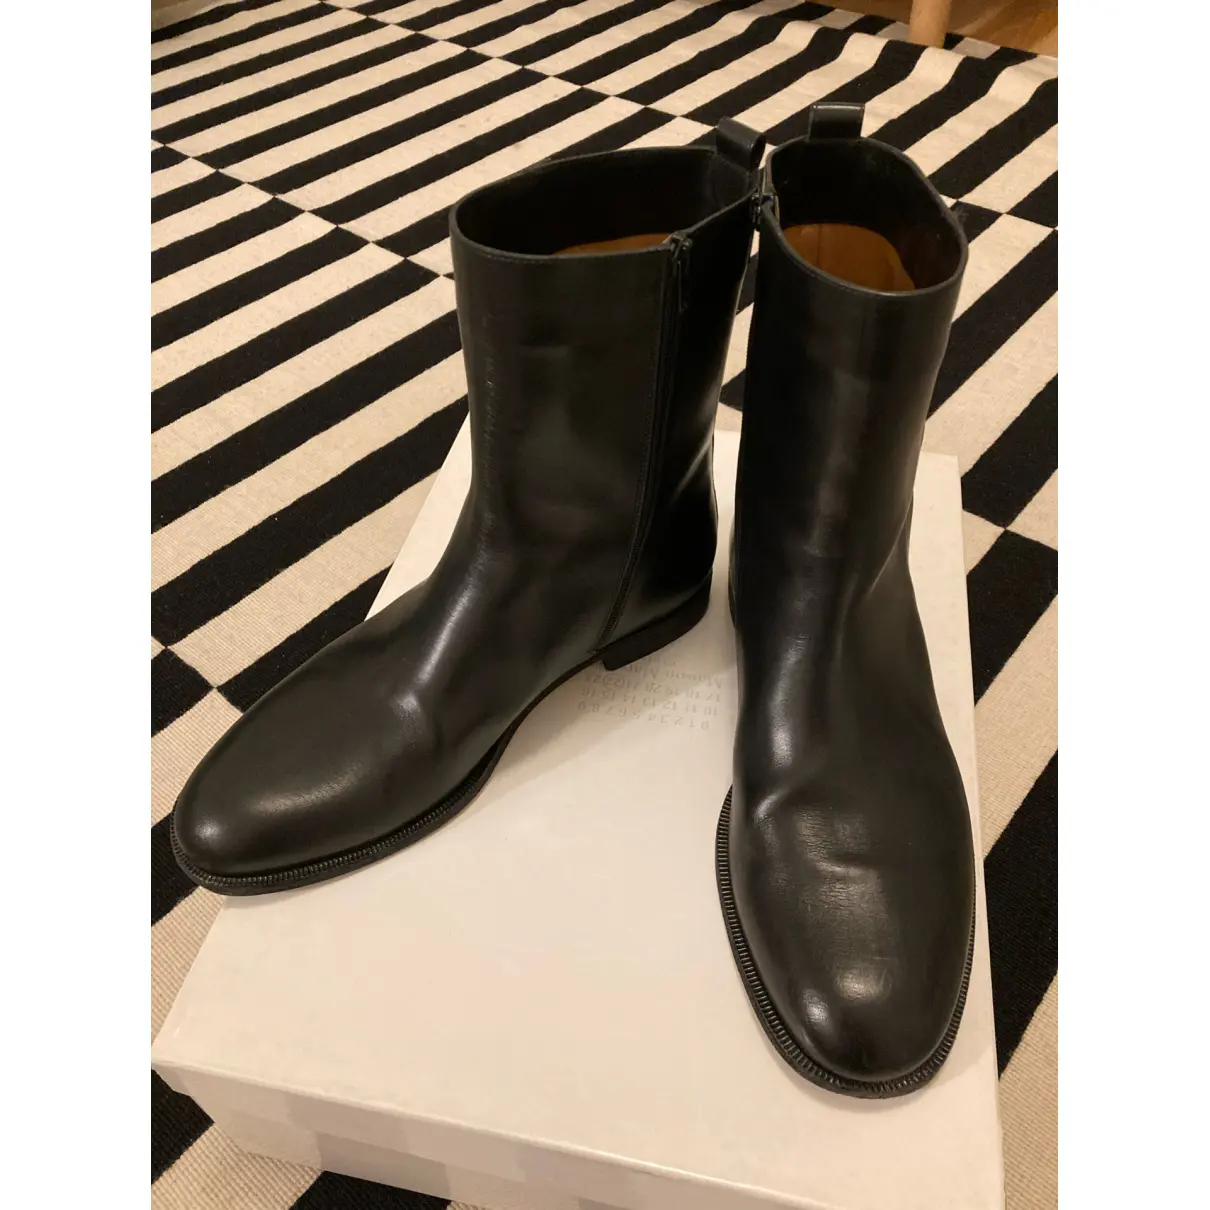 Buy Maison Martin Margiela Leather boots online